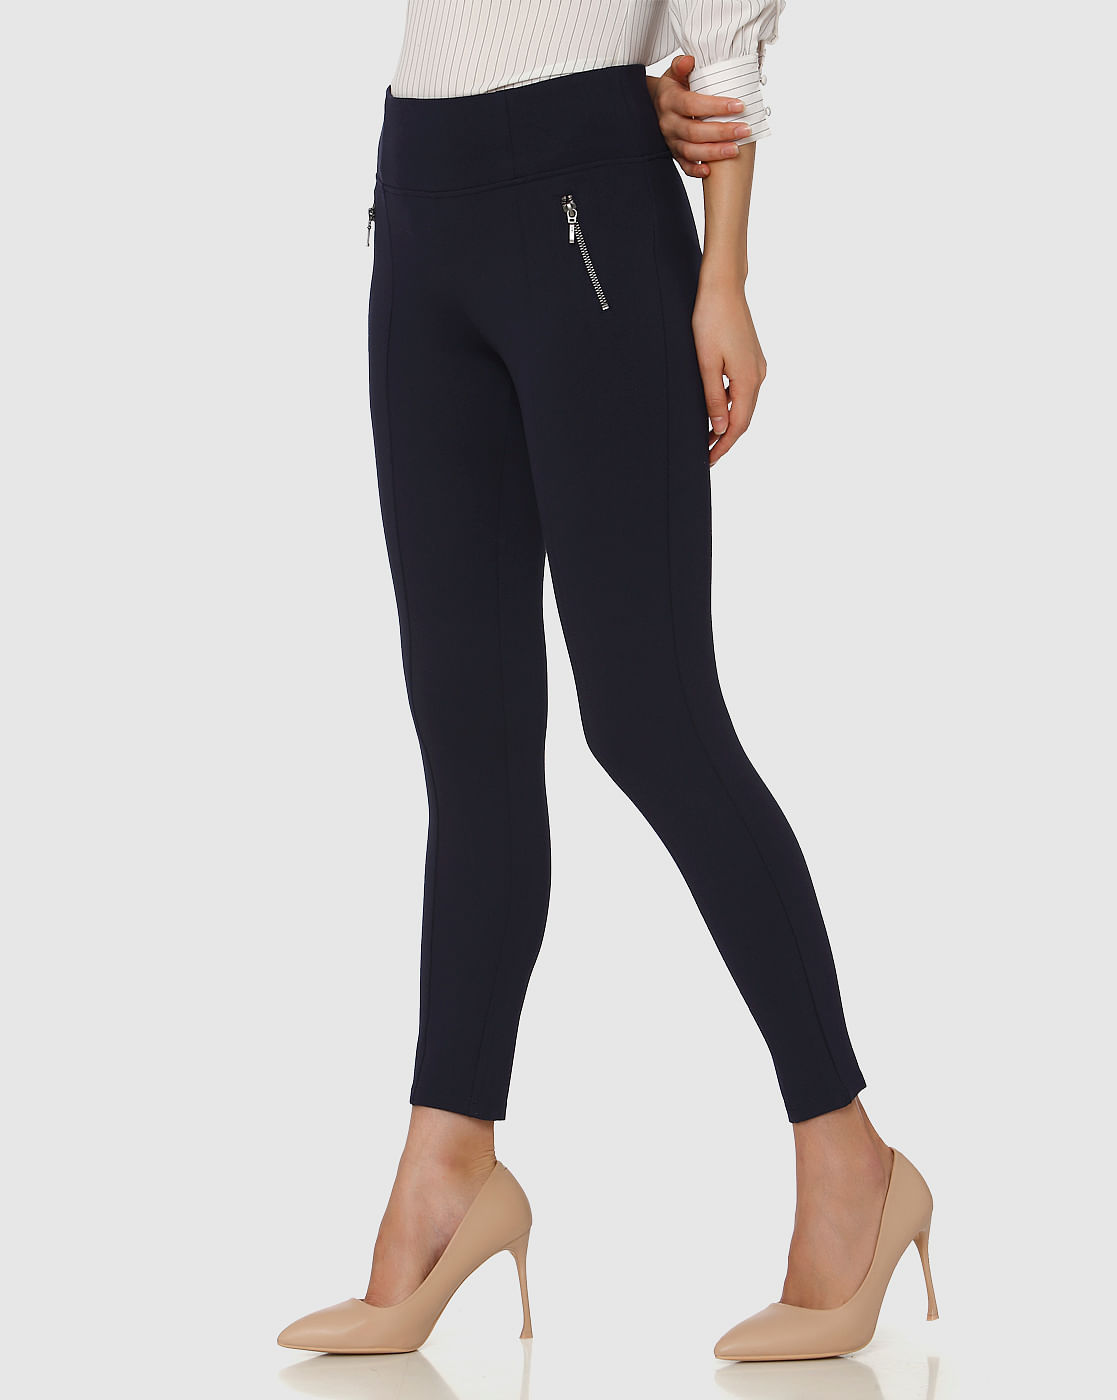 Women Leggins Geometric Print Polyester Fitness Ankle Length Mujer Yoga  Pants | eBay